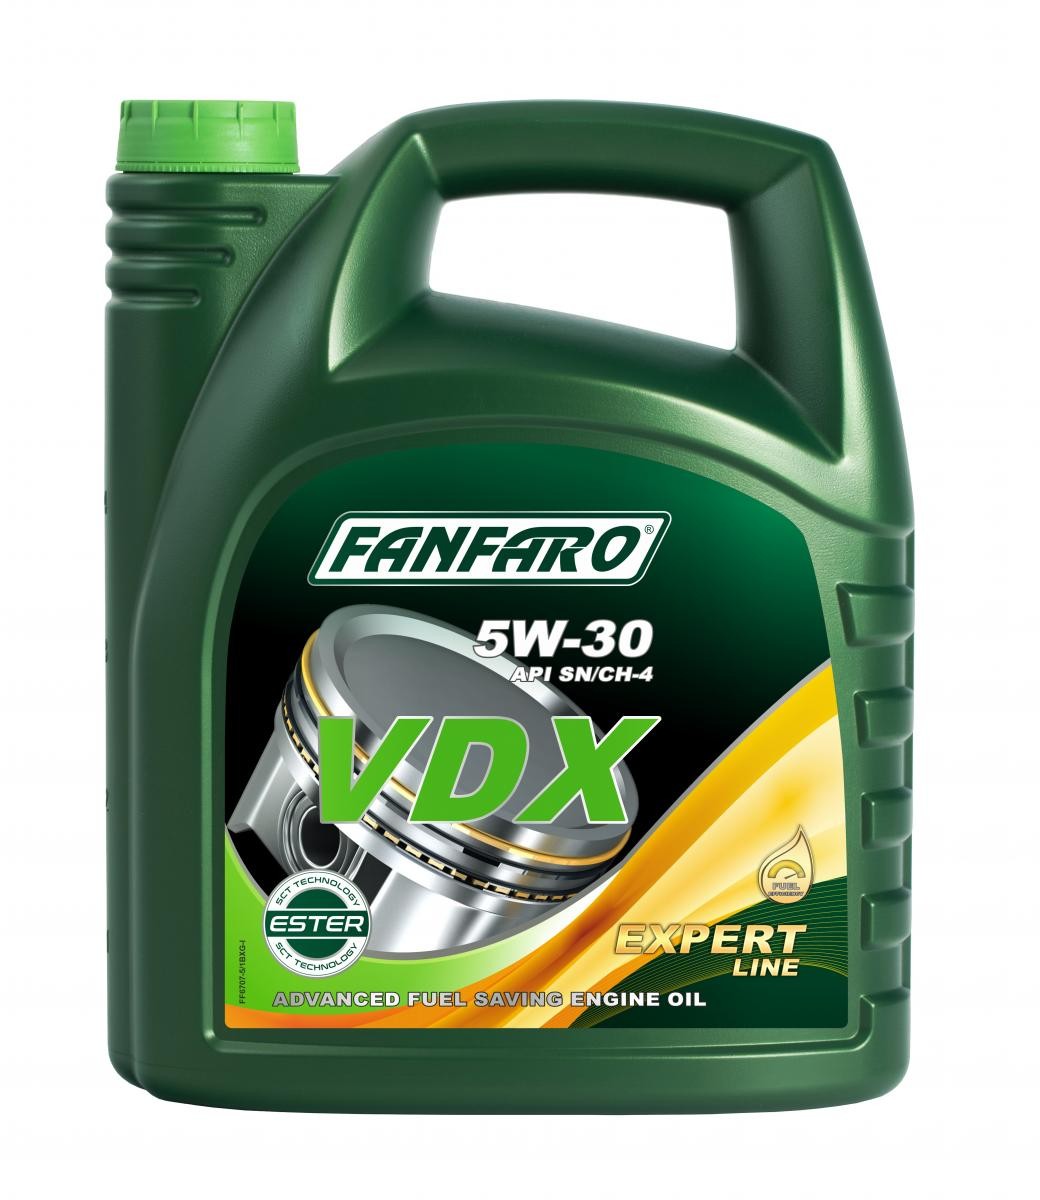 FANFARO Expert Line, VDX FF6707-5 Olie 5W-30, 5L, Synthetische olie